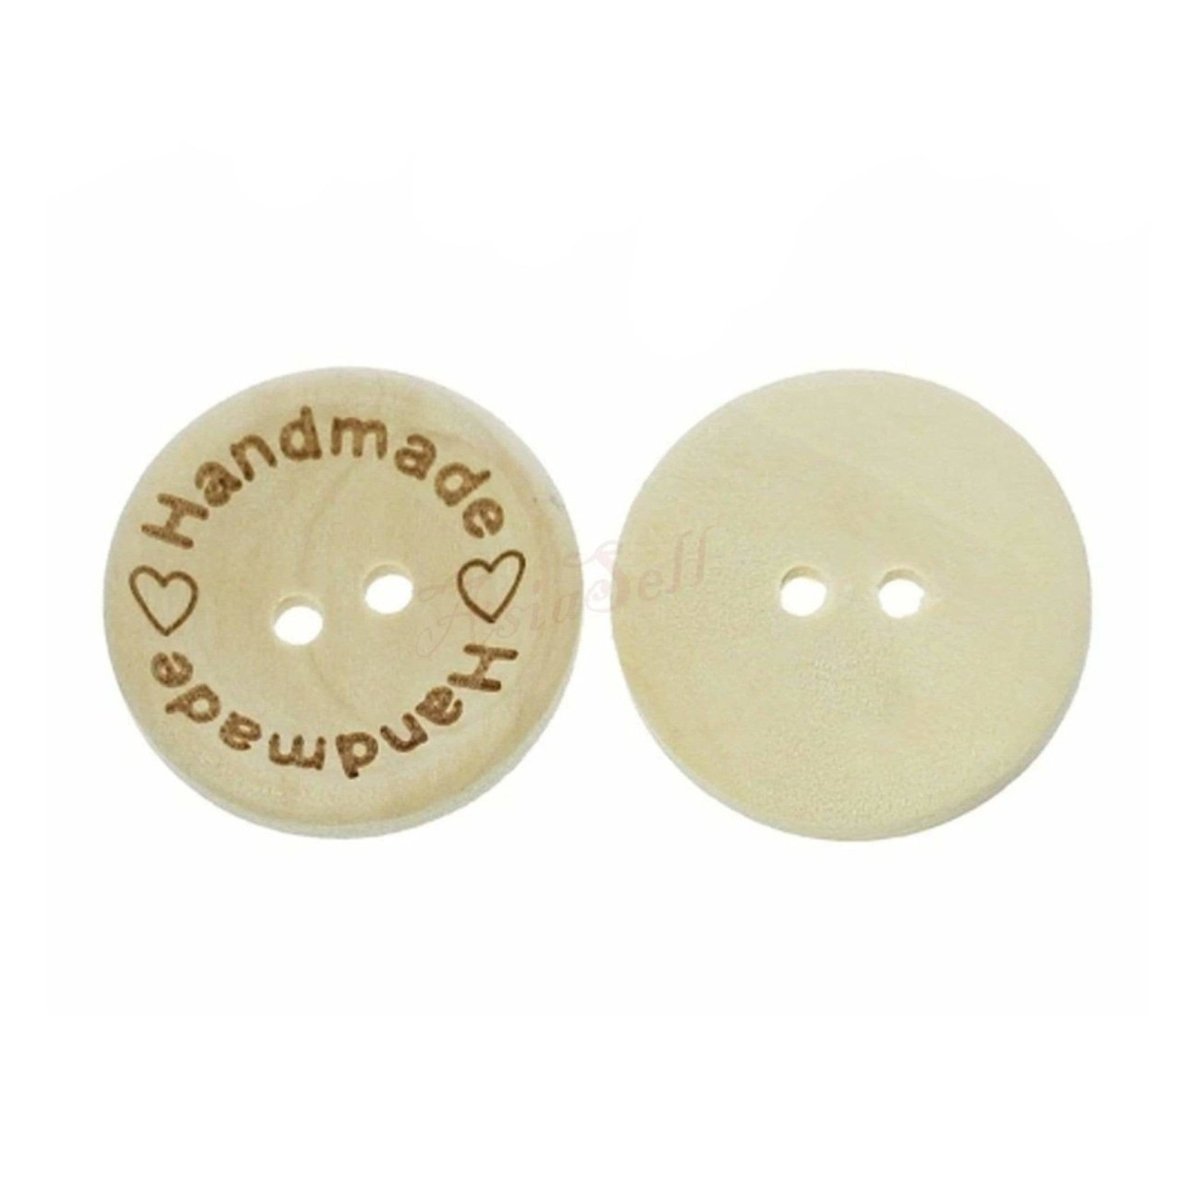 100x 15mm "Handmade Handmade" Round Wooden Buttons Handmade Clothes - Asia Sell